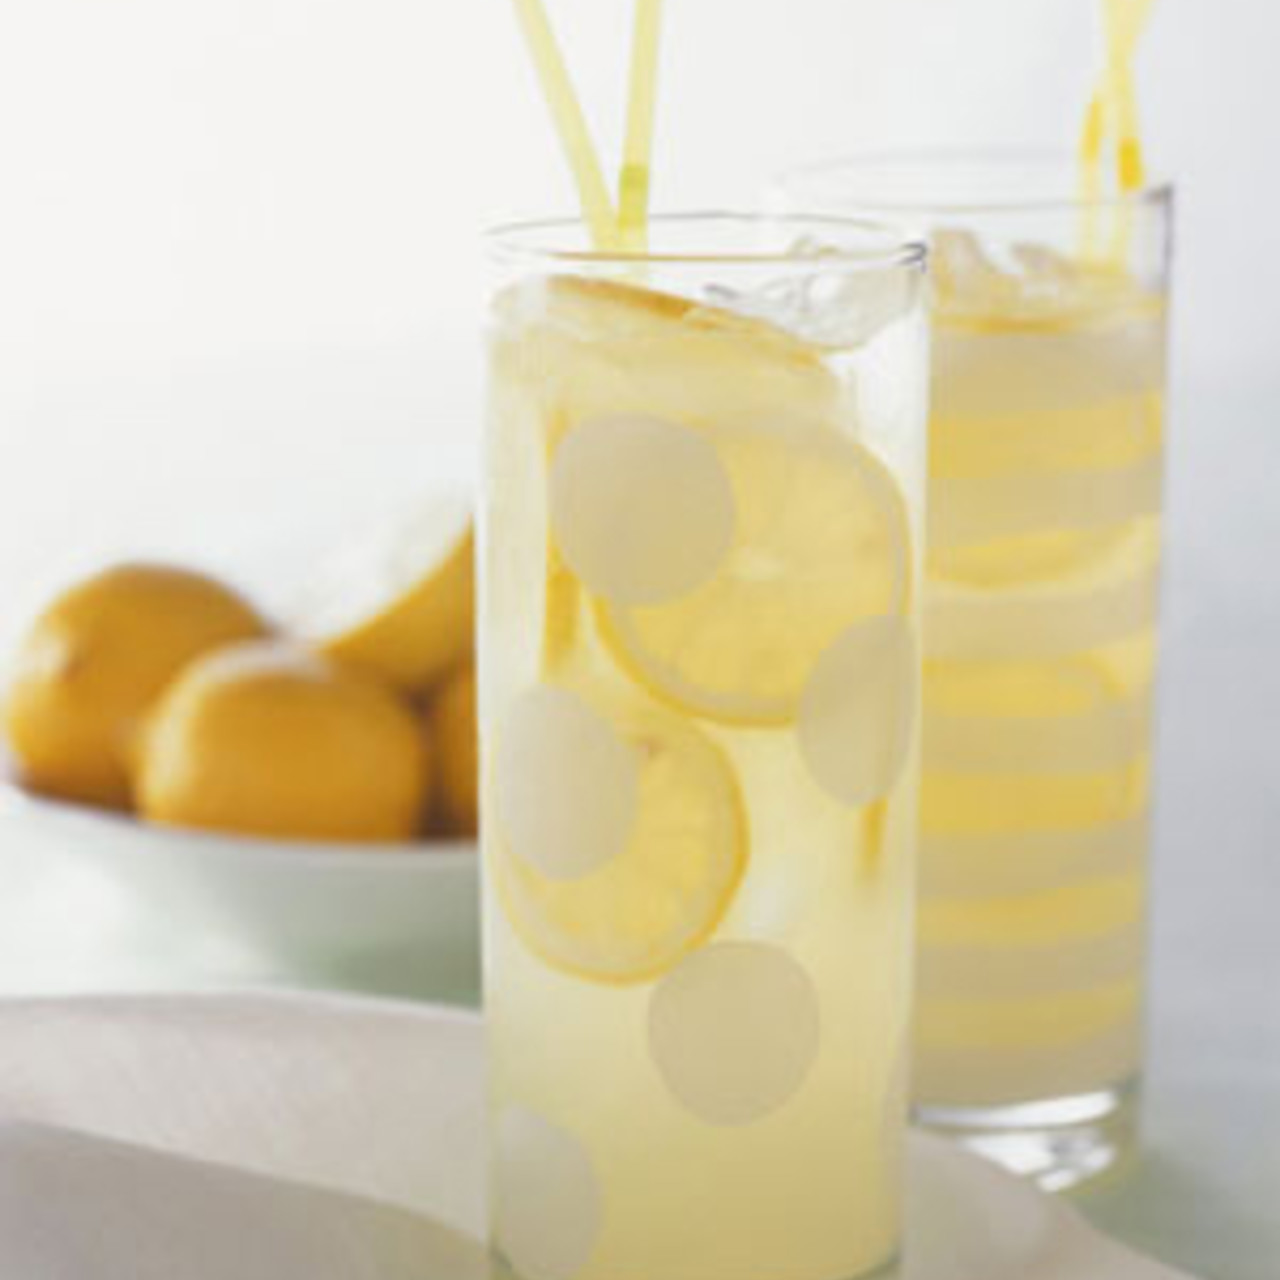 lemonade squeezer